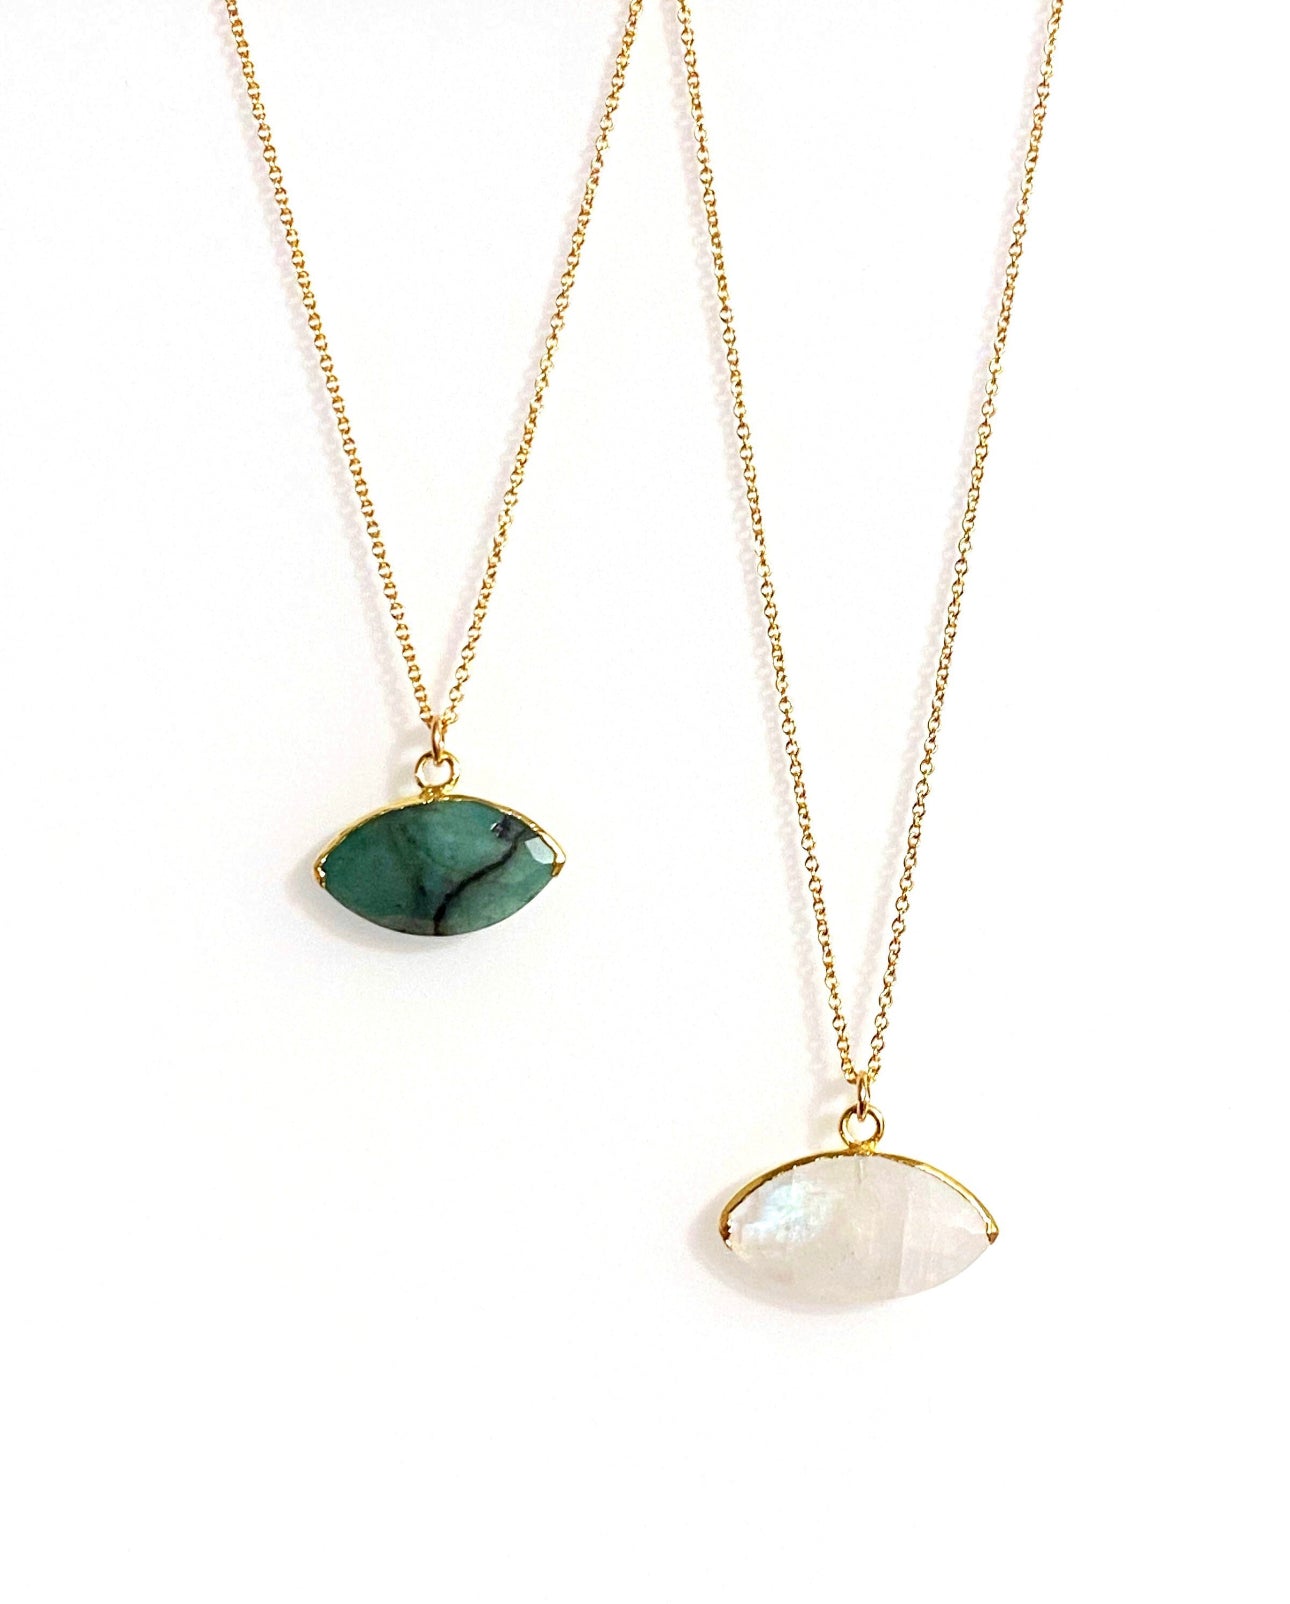 Almond eye necklace (emerald, moonstone)